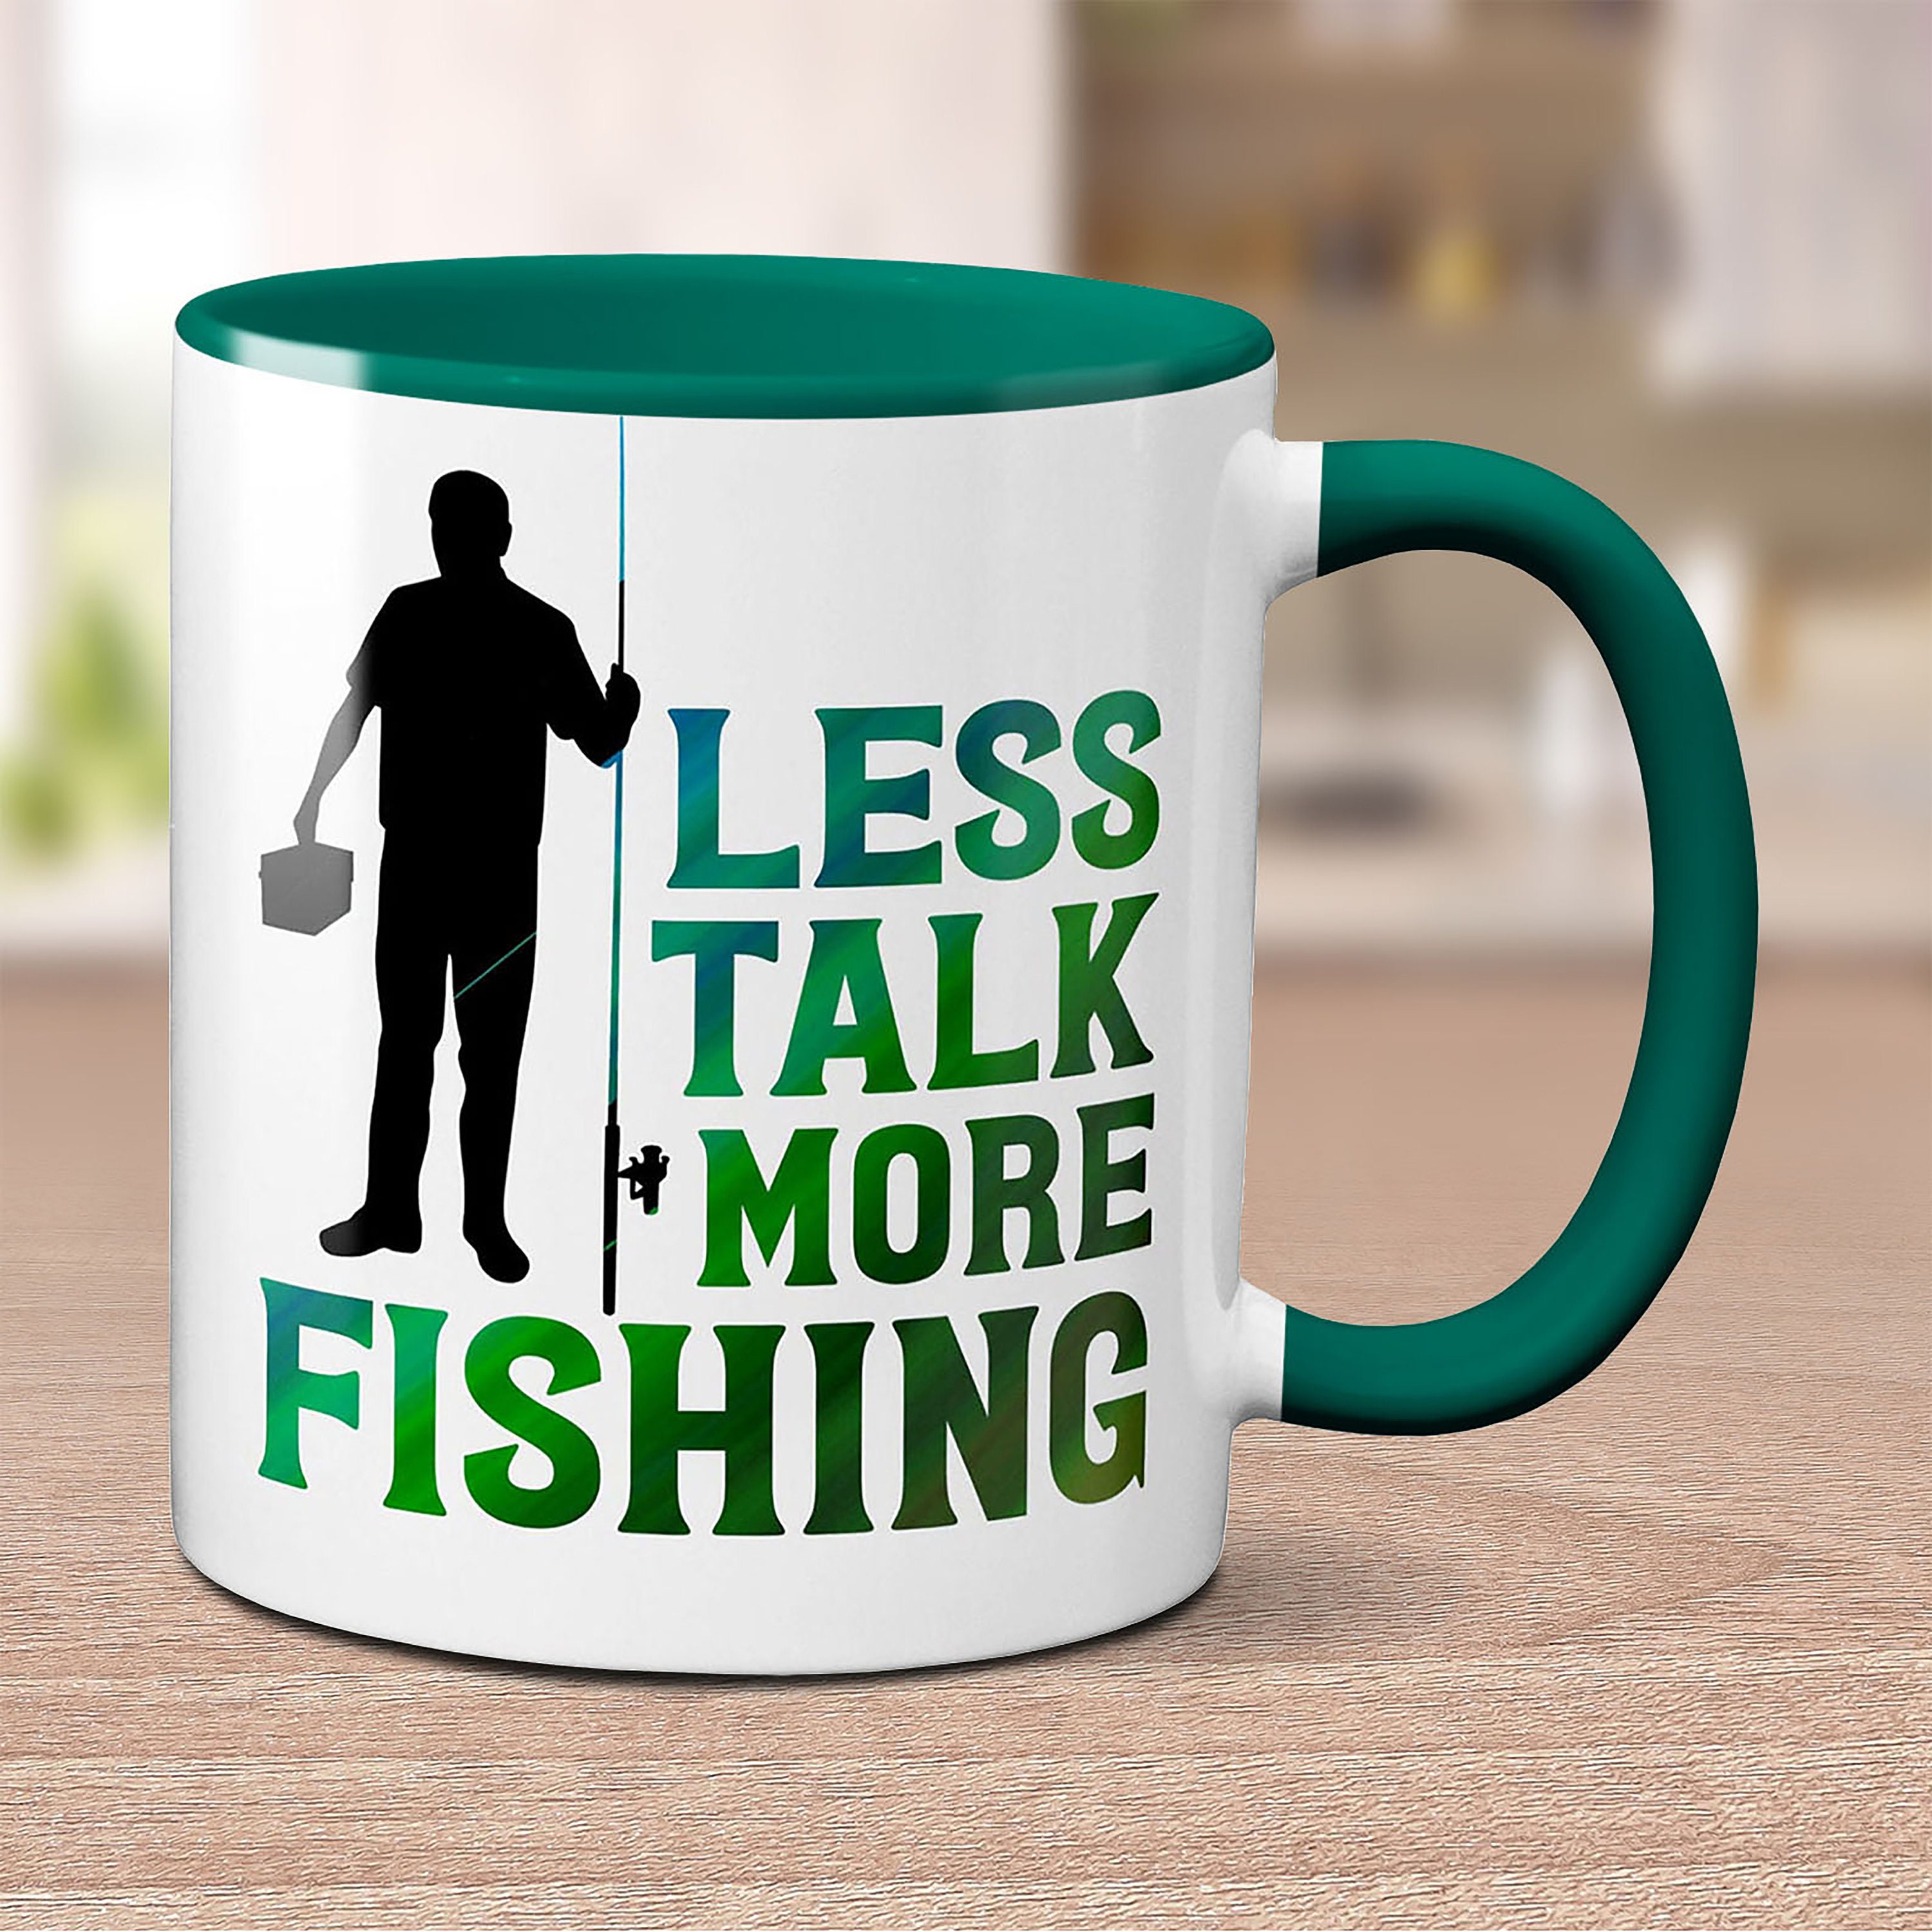 Fish Fishing Mug Personalized Gift for the Ultimate Fisherman